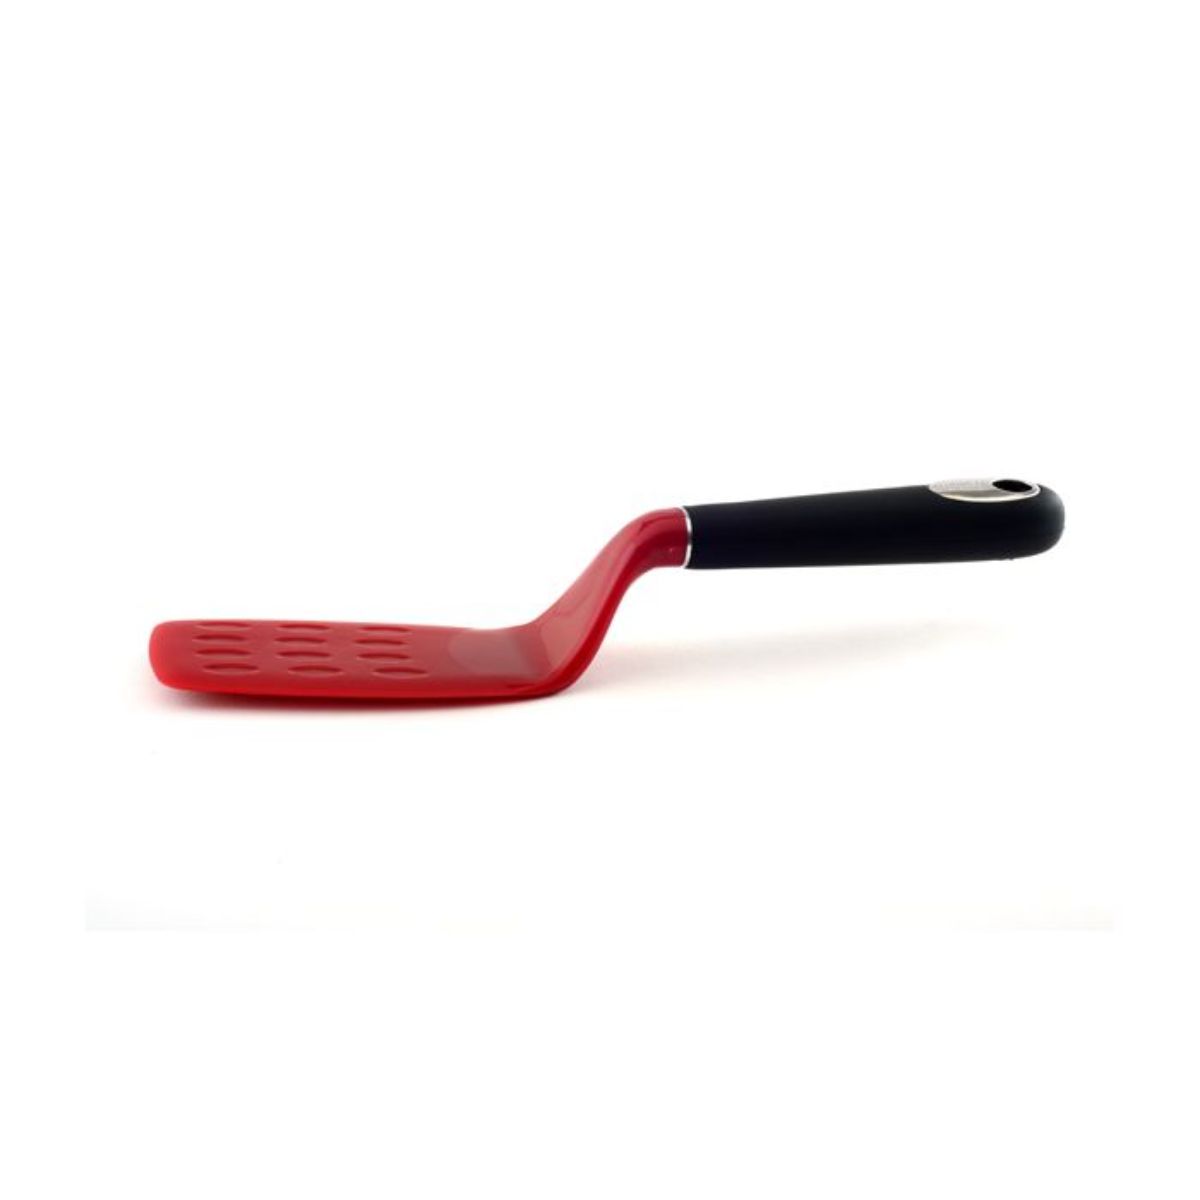 Norpro Grip-EZ Brownie Spatula W/Scalloped Blade, Red/Black